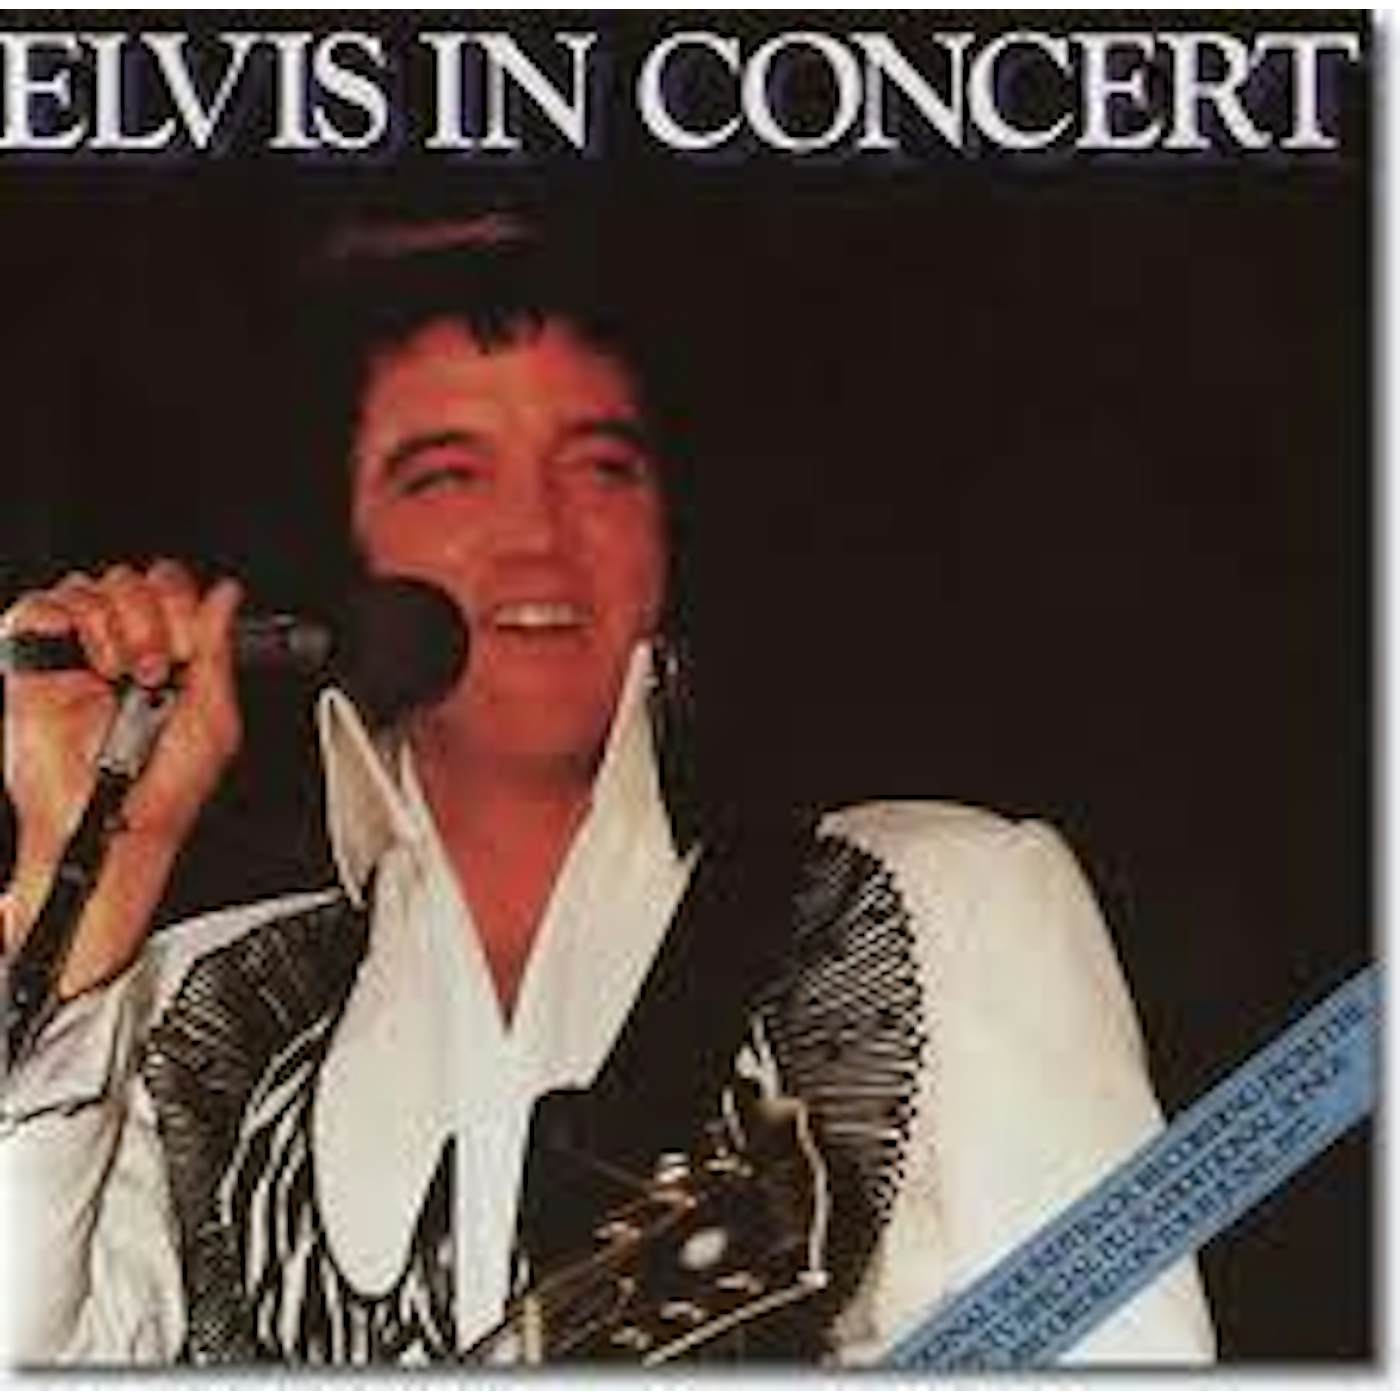 Elvis Presley IN CONCERT CD